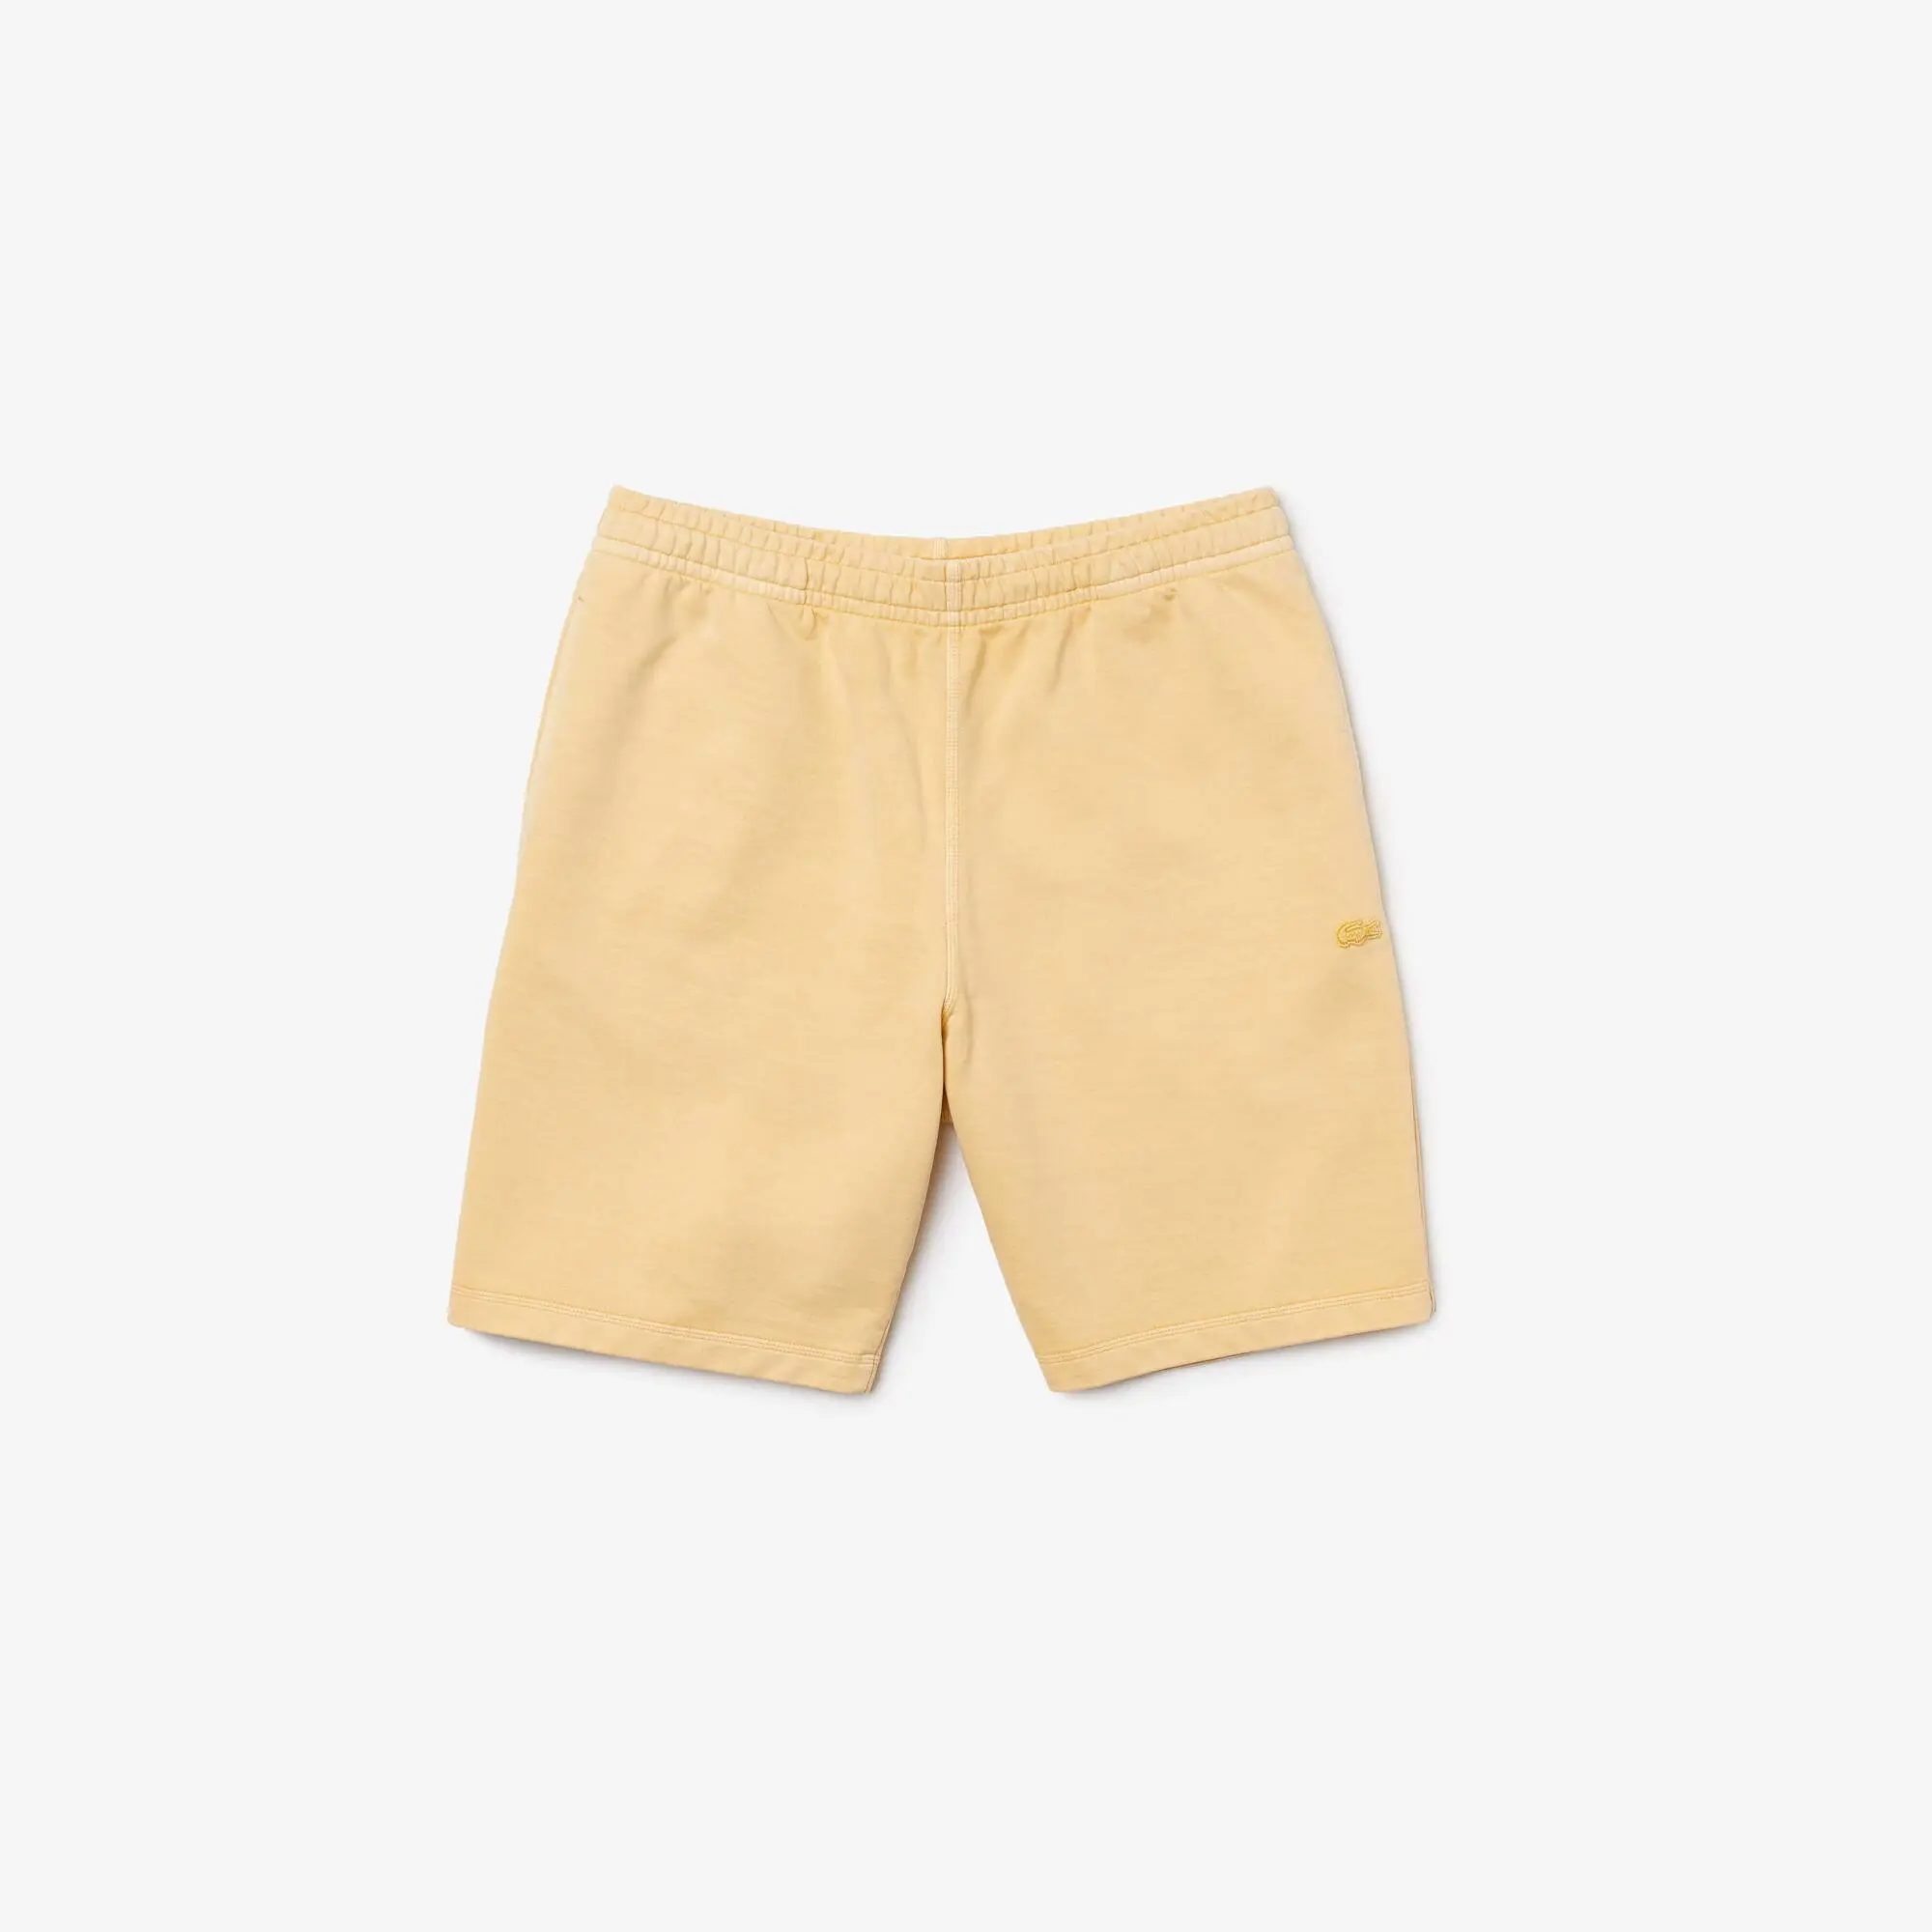 Lacoste Men’s Unbrushed Organic Cotton Fleece Shorts. 2